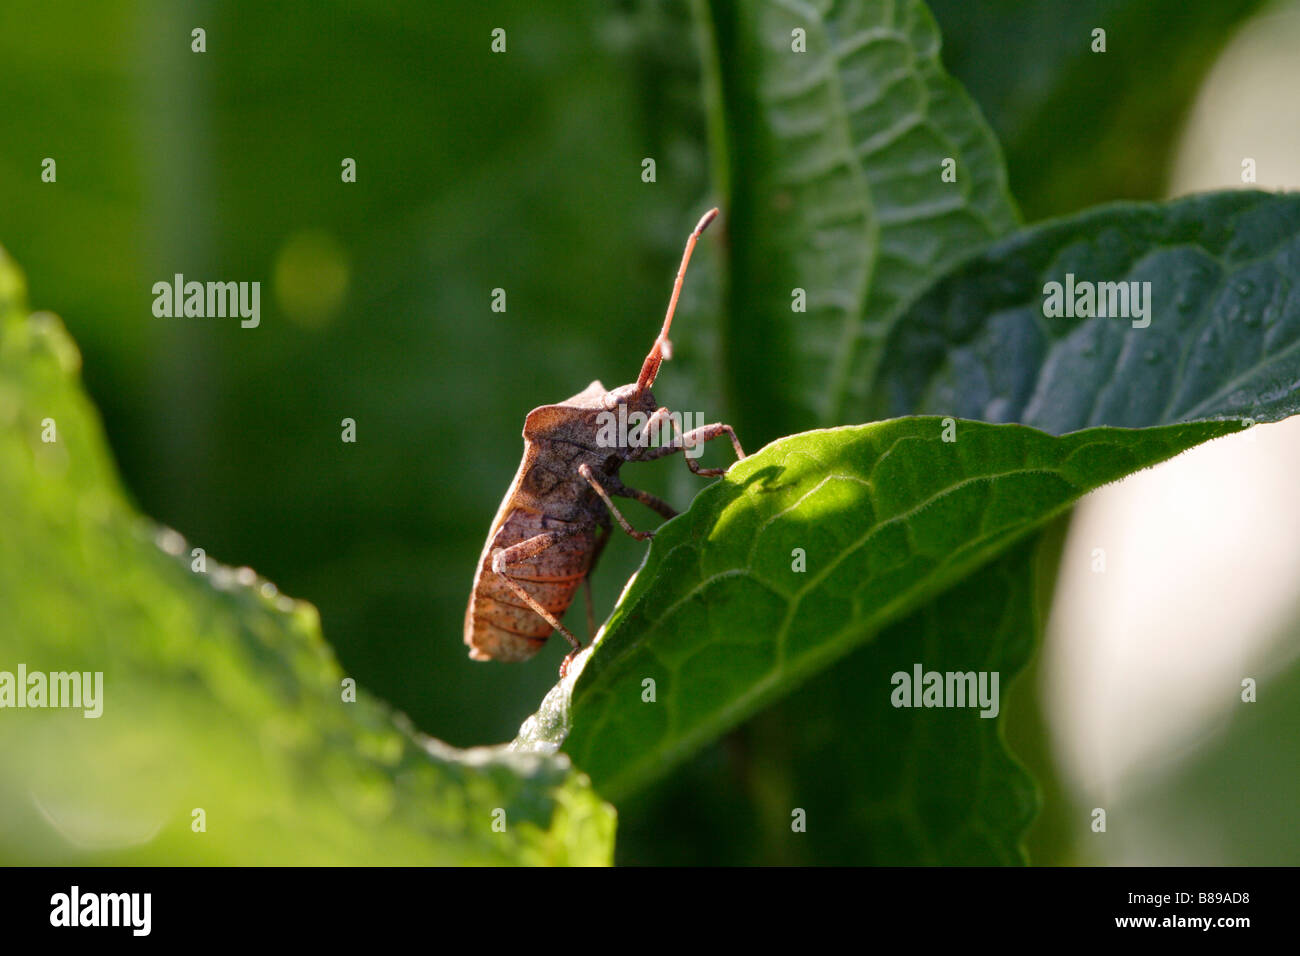 True bug, squash bug, dock bug, coreus marginatus Stock Photo